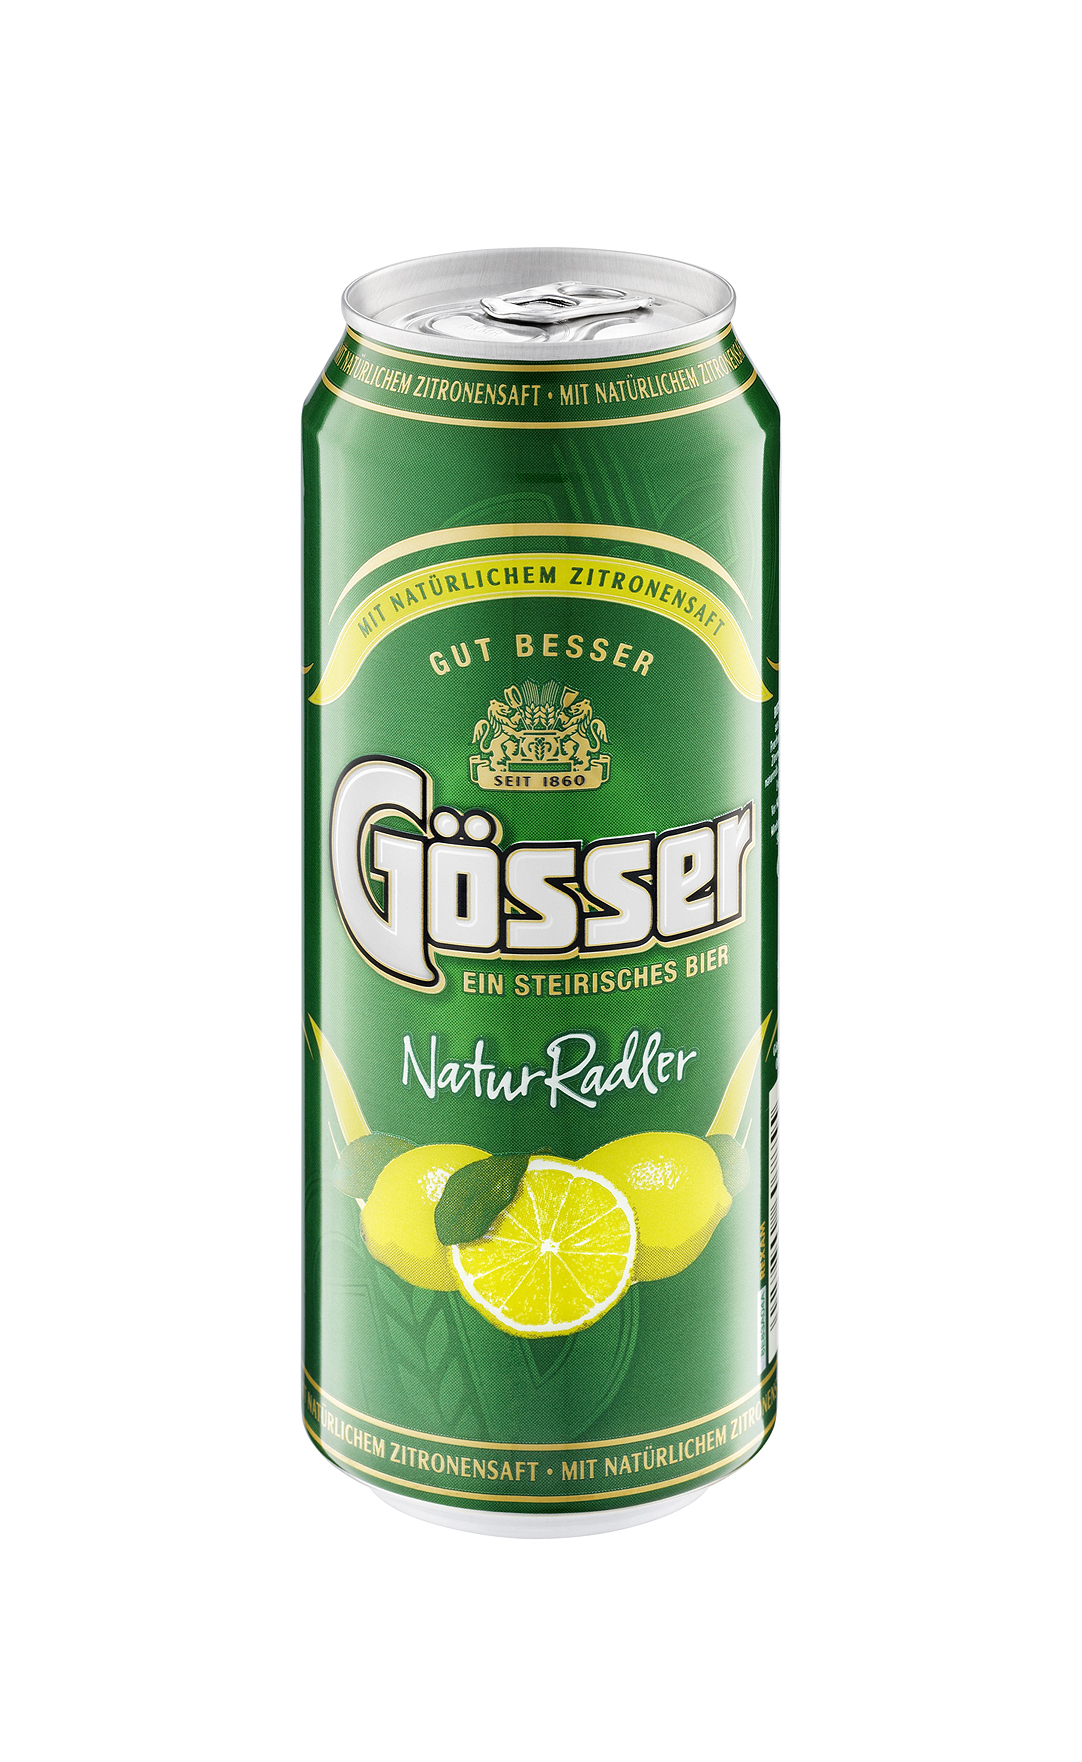 Gösser Natur Radler shandy / Radler / Beer - OnlineFromAustria.com